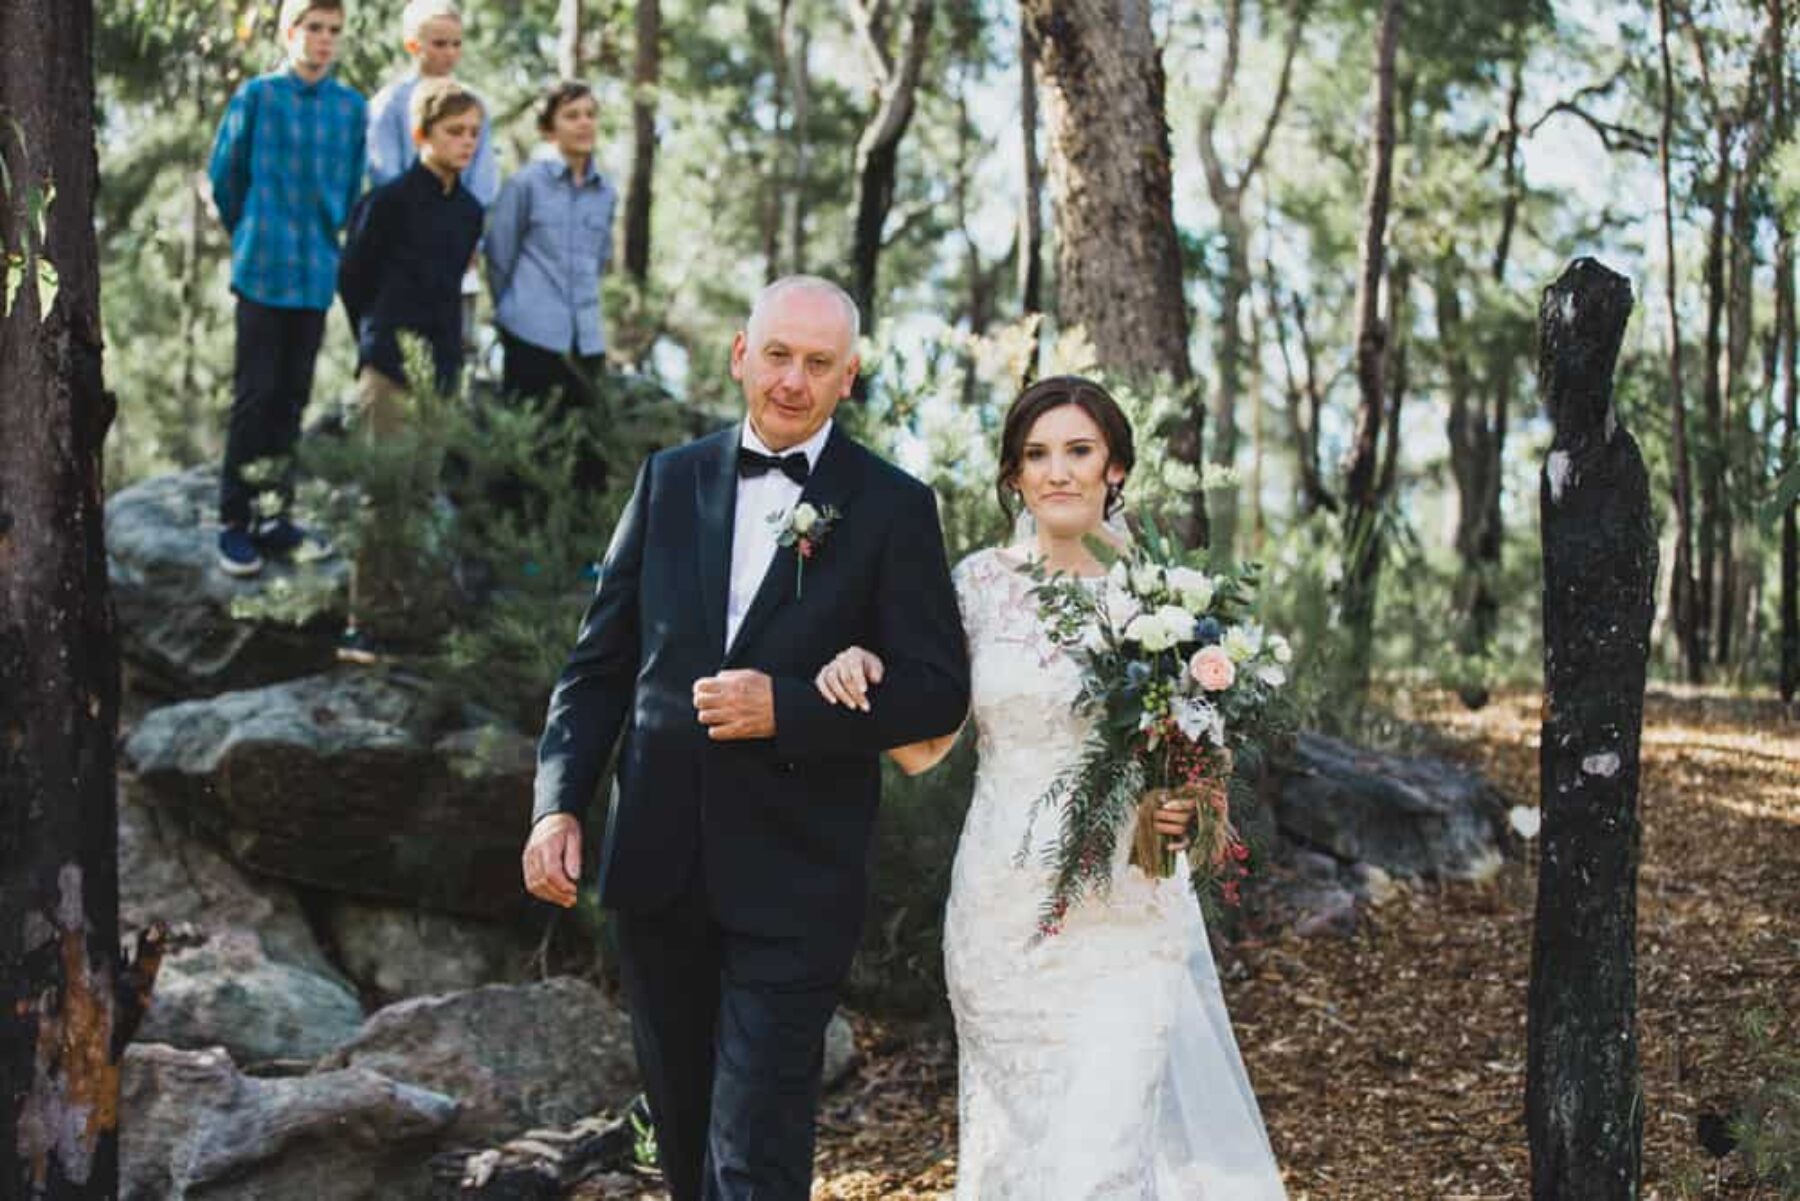 Australian outback wedding